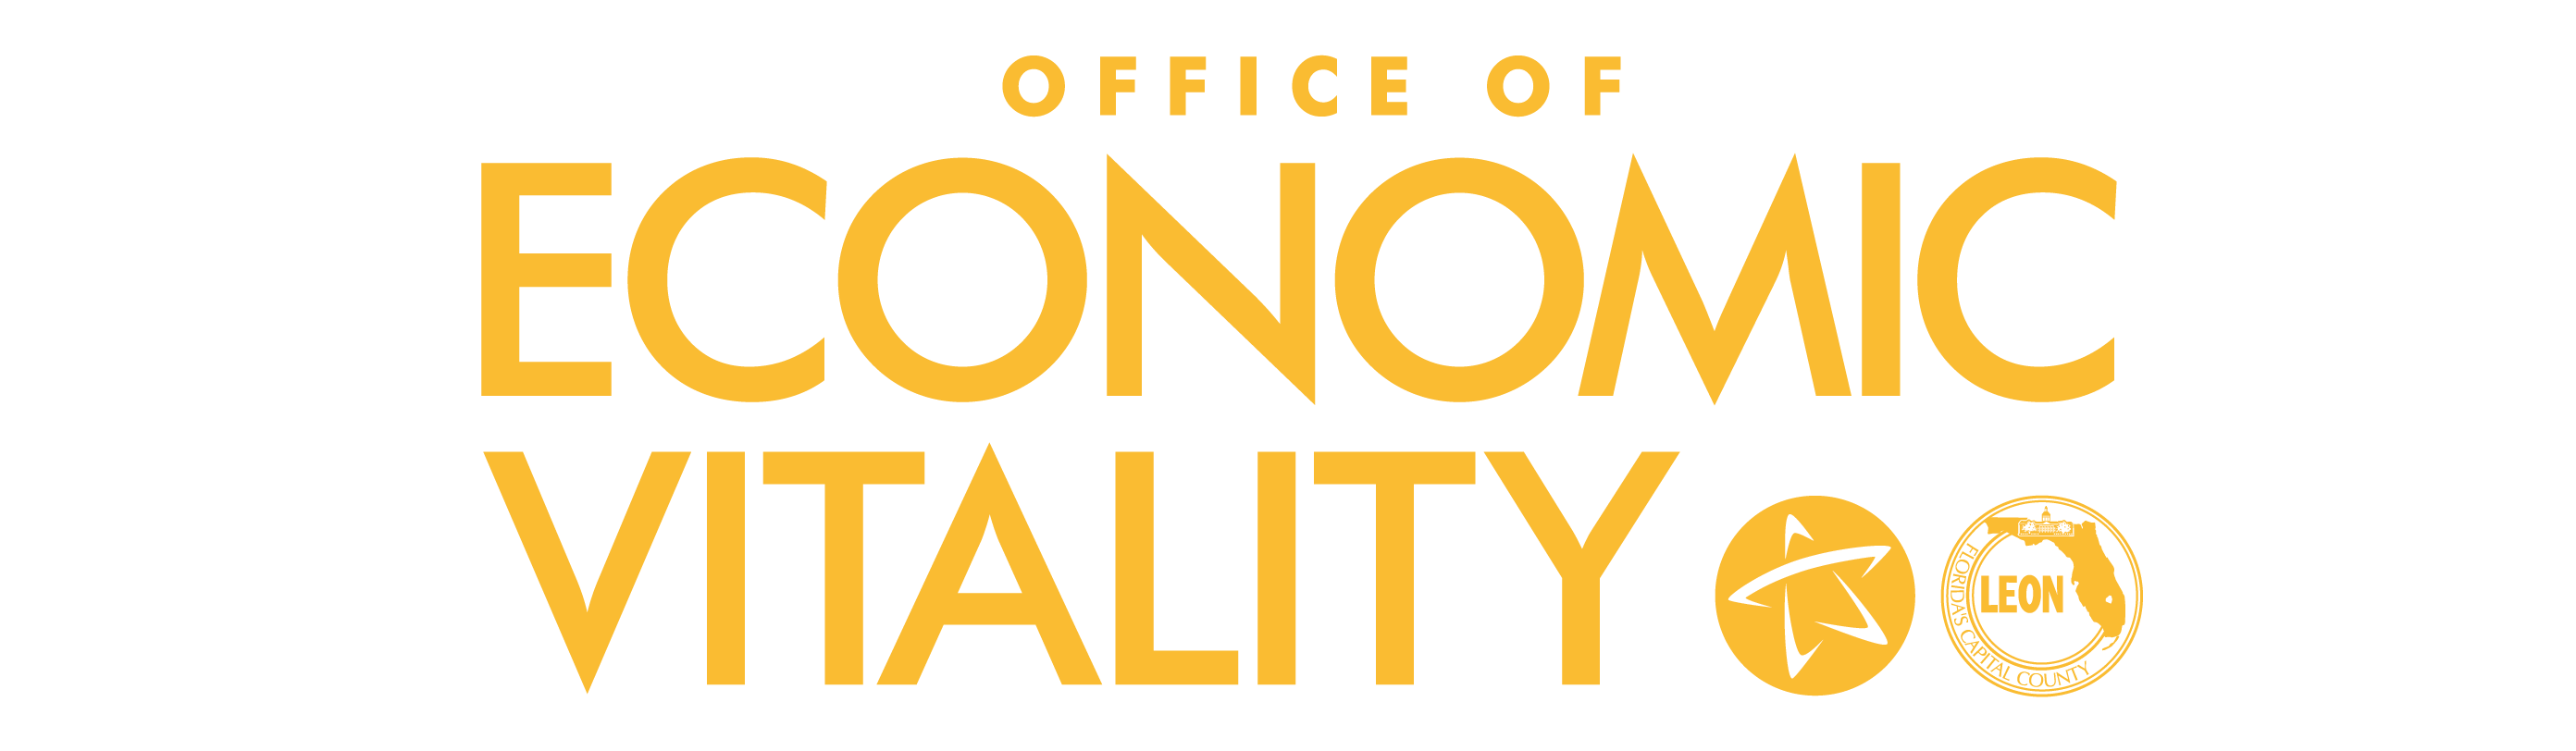 Office of Economic Vitality Logo